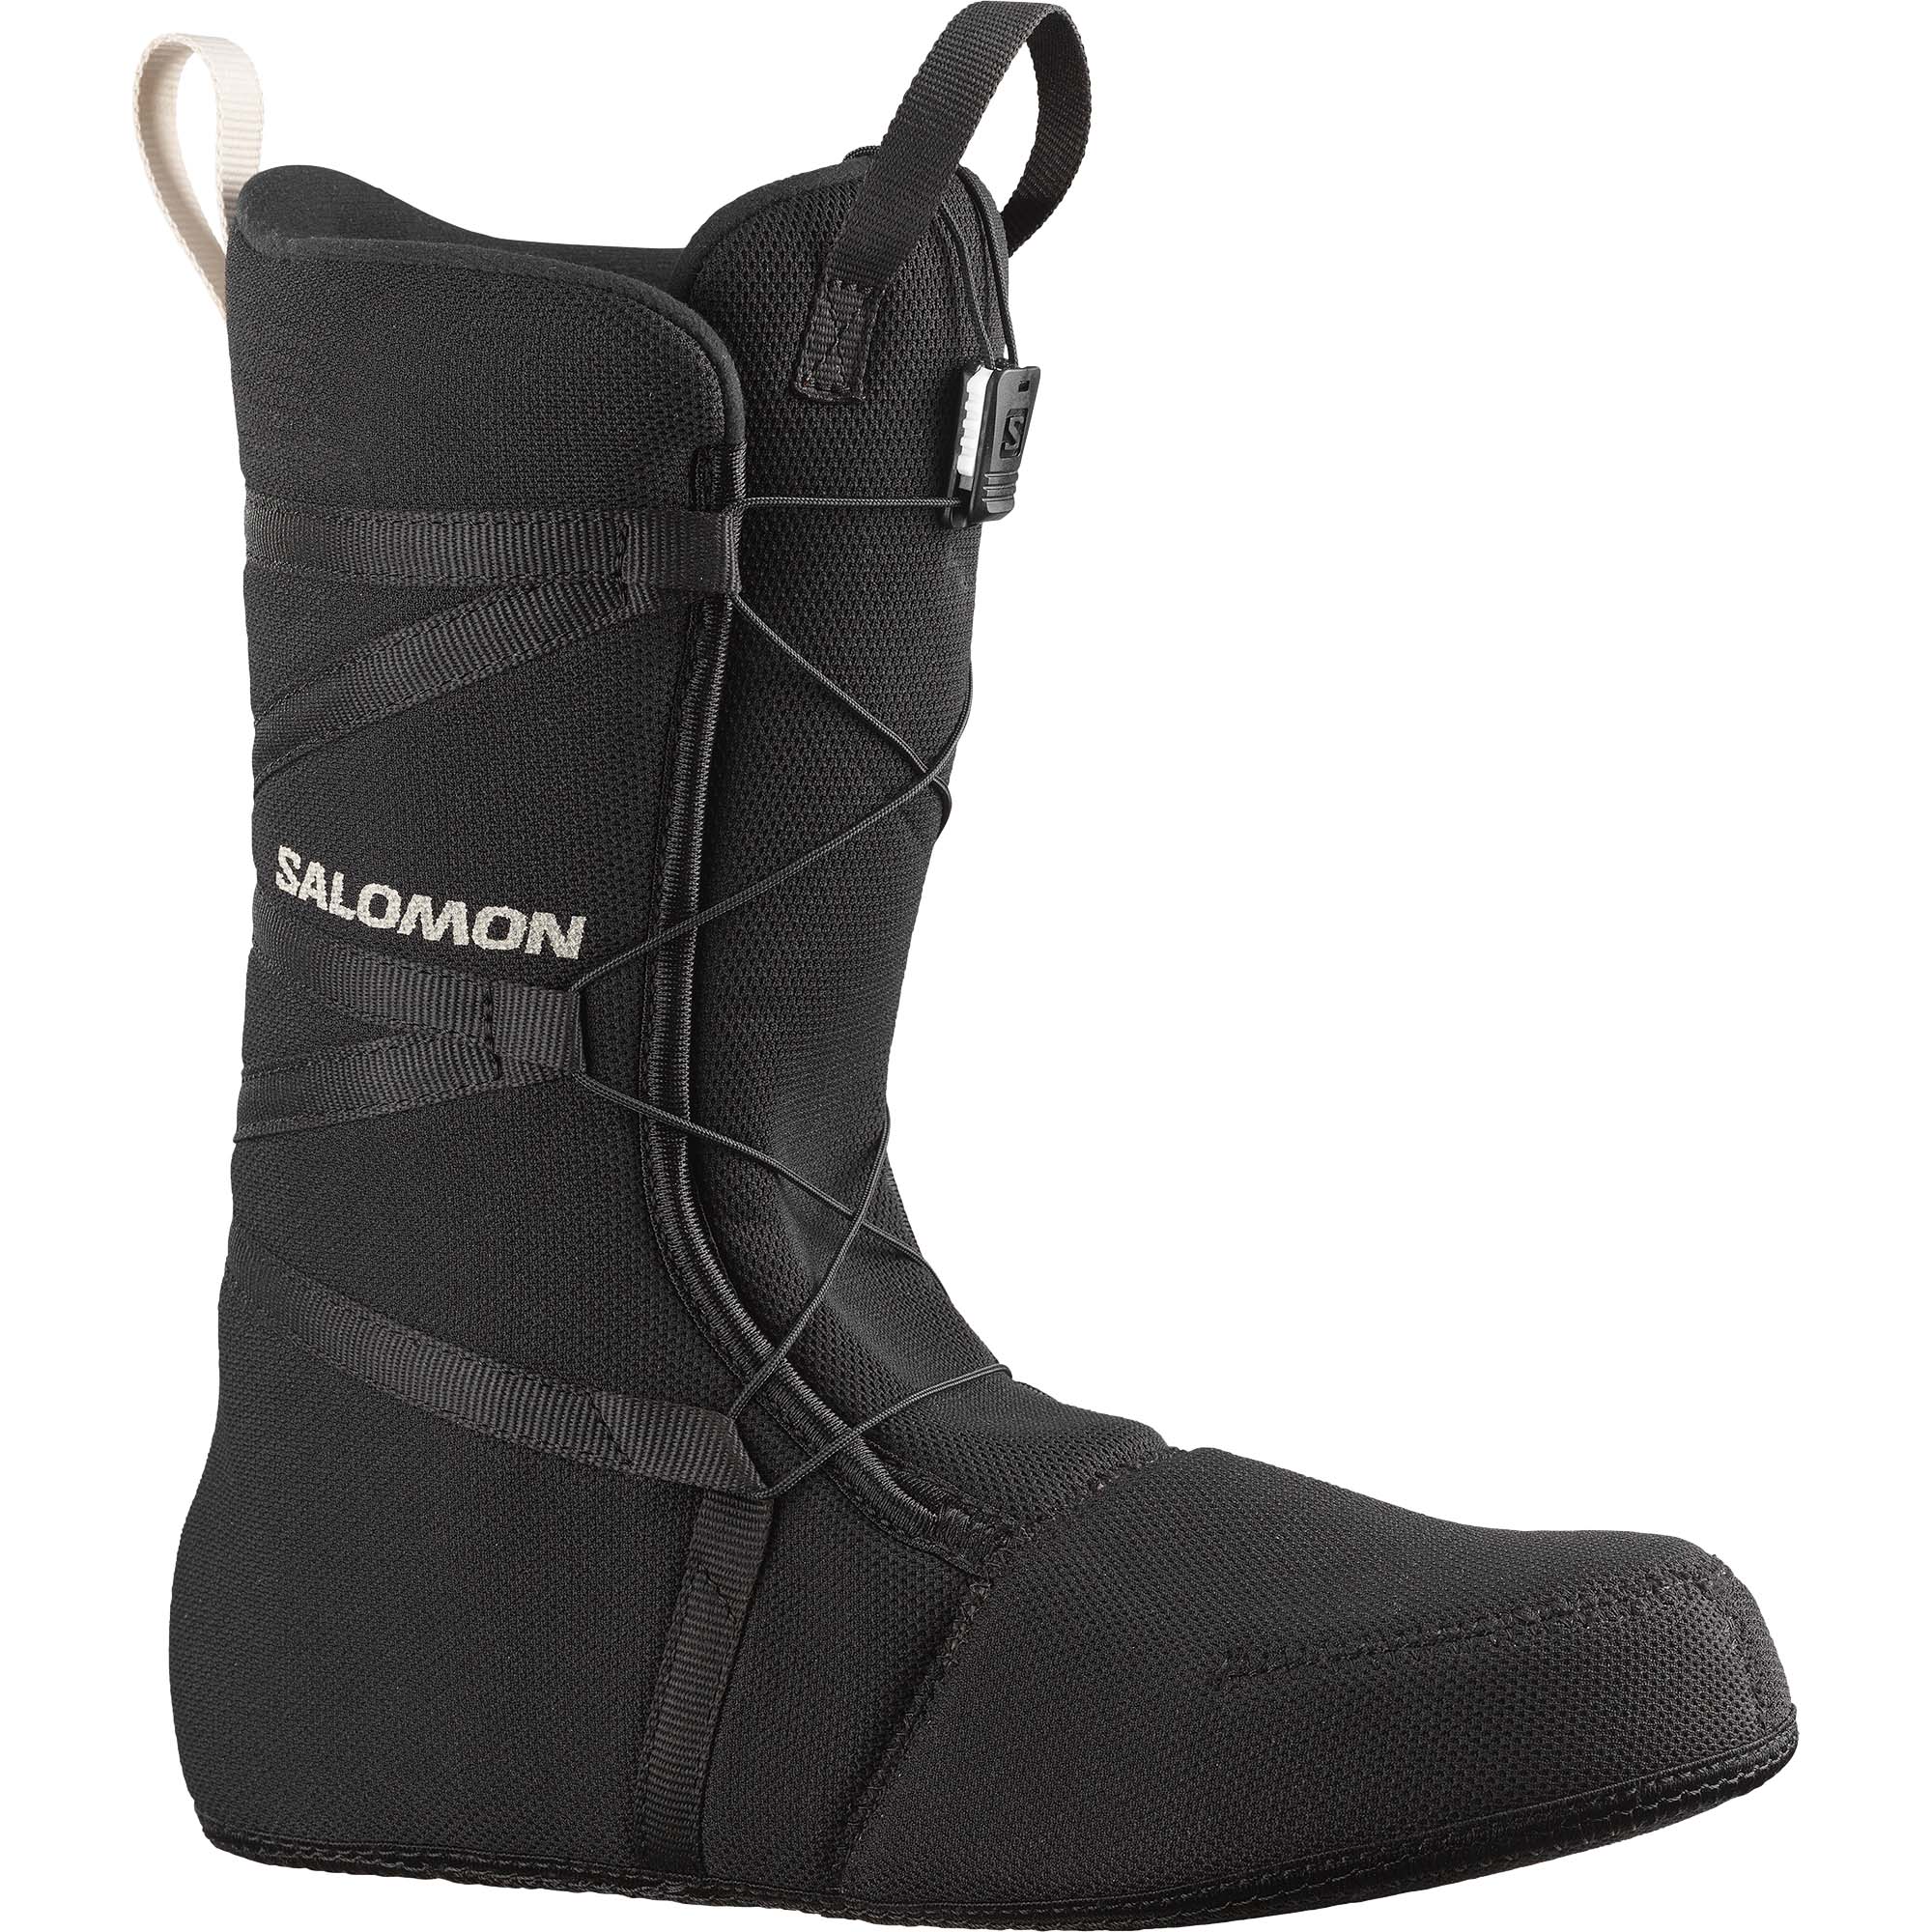 Salomon Faction Boa Men's Snowboard Boots